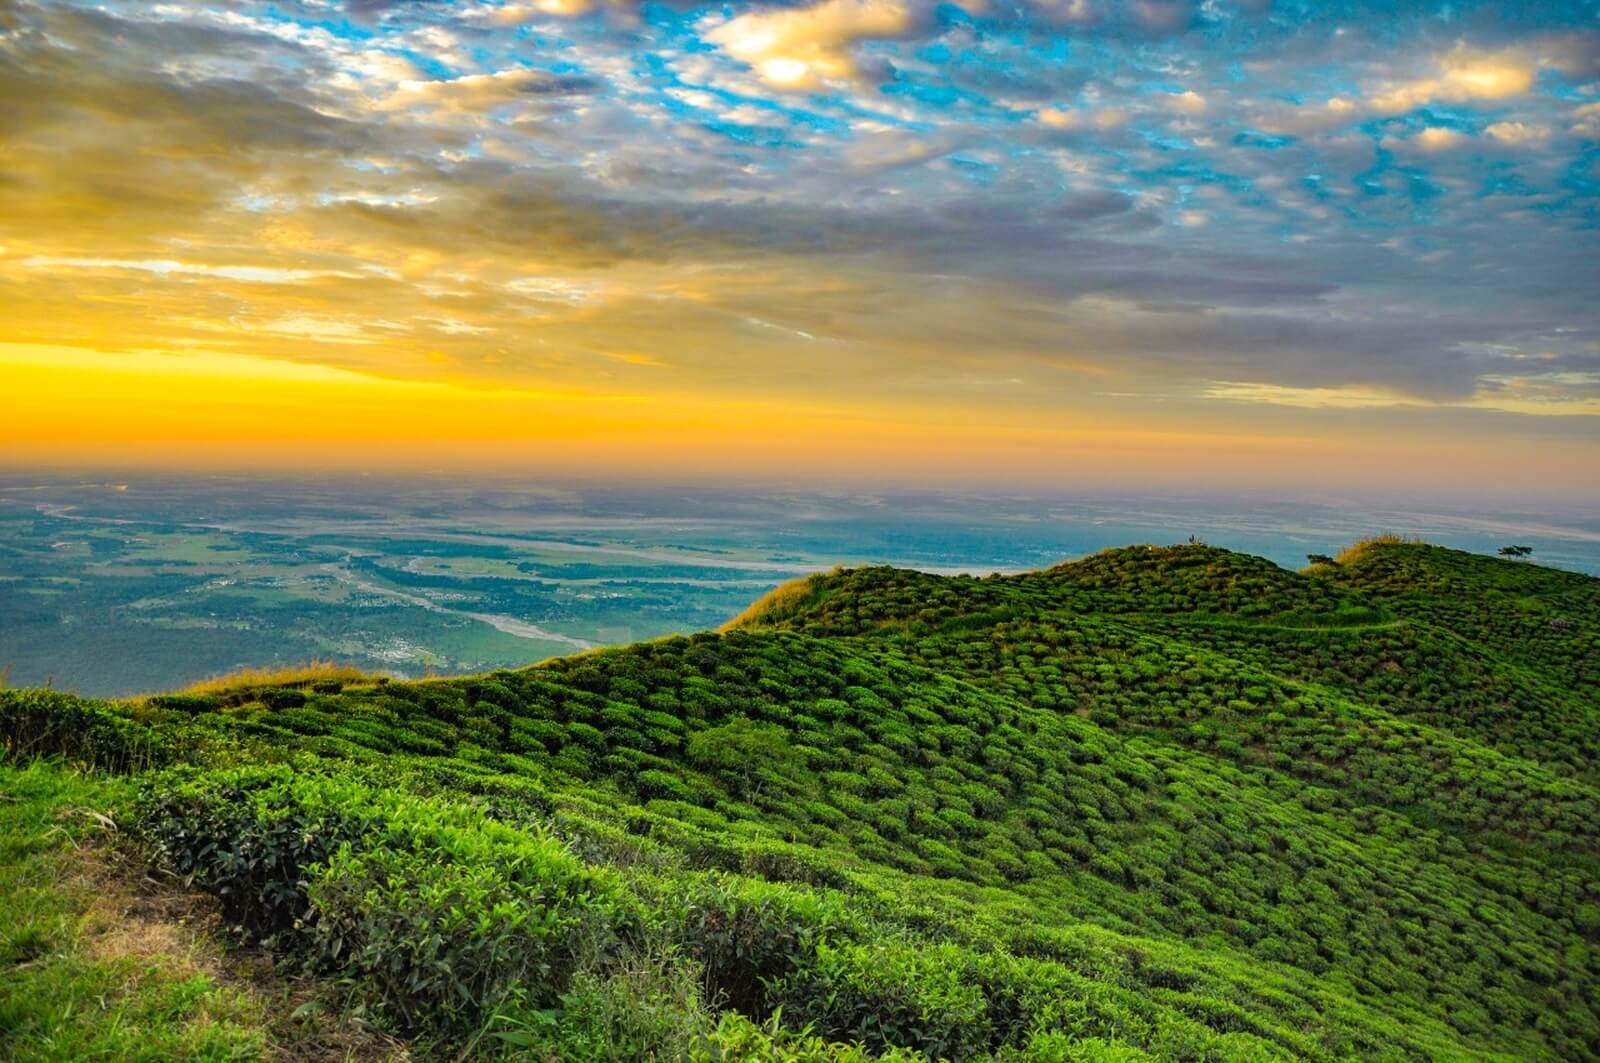 A lush green tea plantation view of Mirik’s serene hills in Darjeeling, India